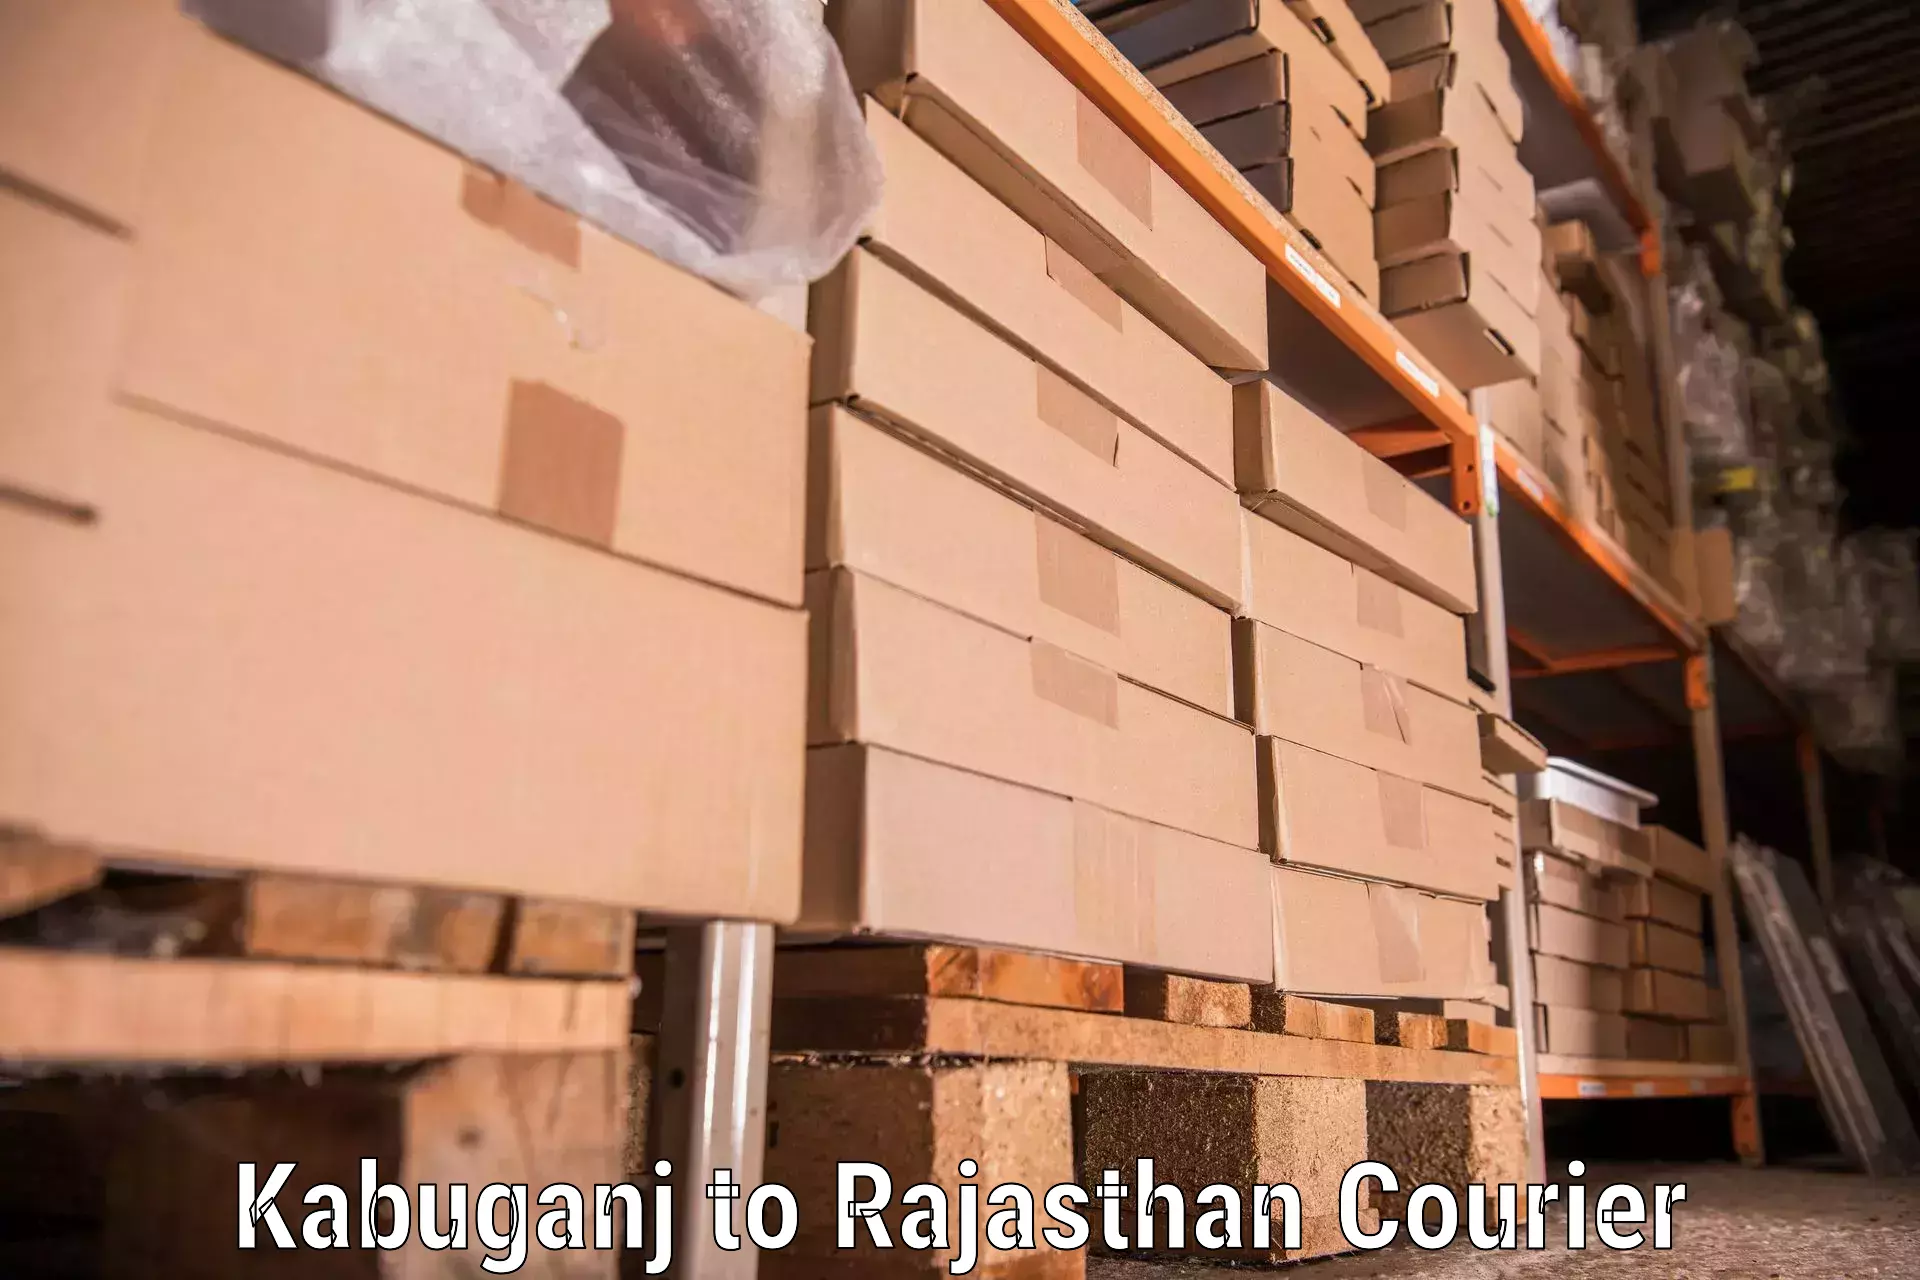 Specialized moving company Kabuganj to Bikaner